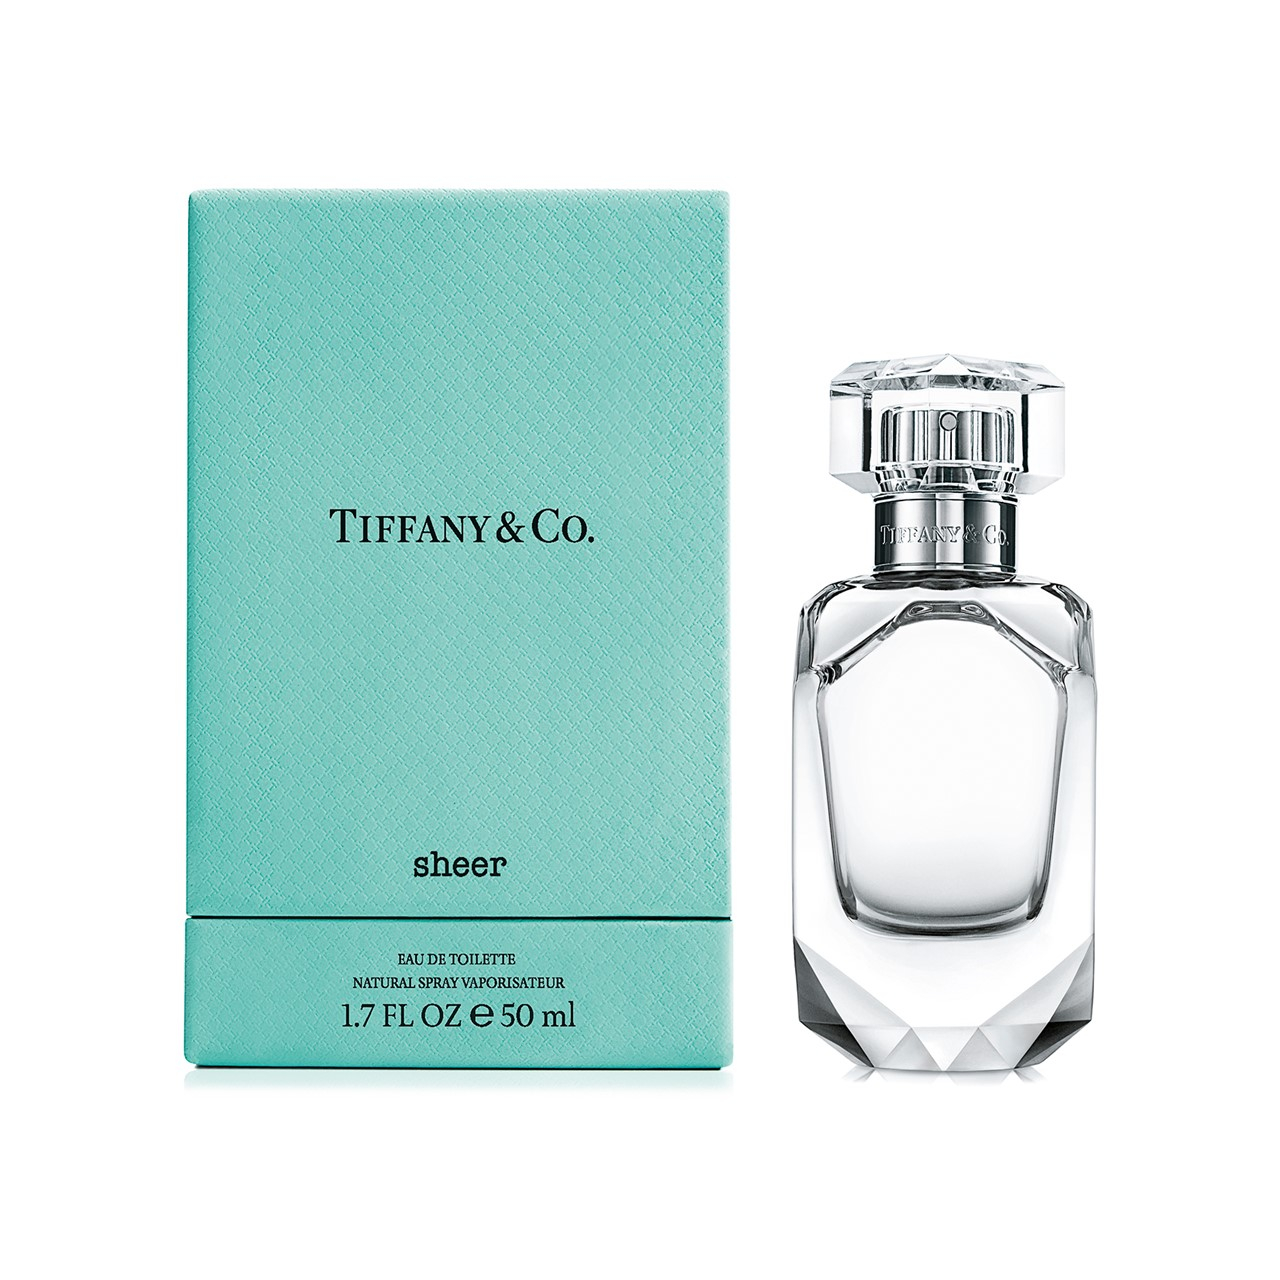 Tiffany & Co. Sheer Eau de Toilette 50ml (1.7fl oz)